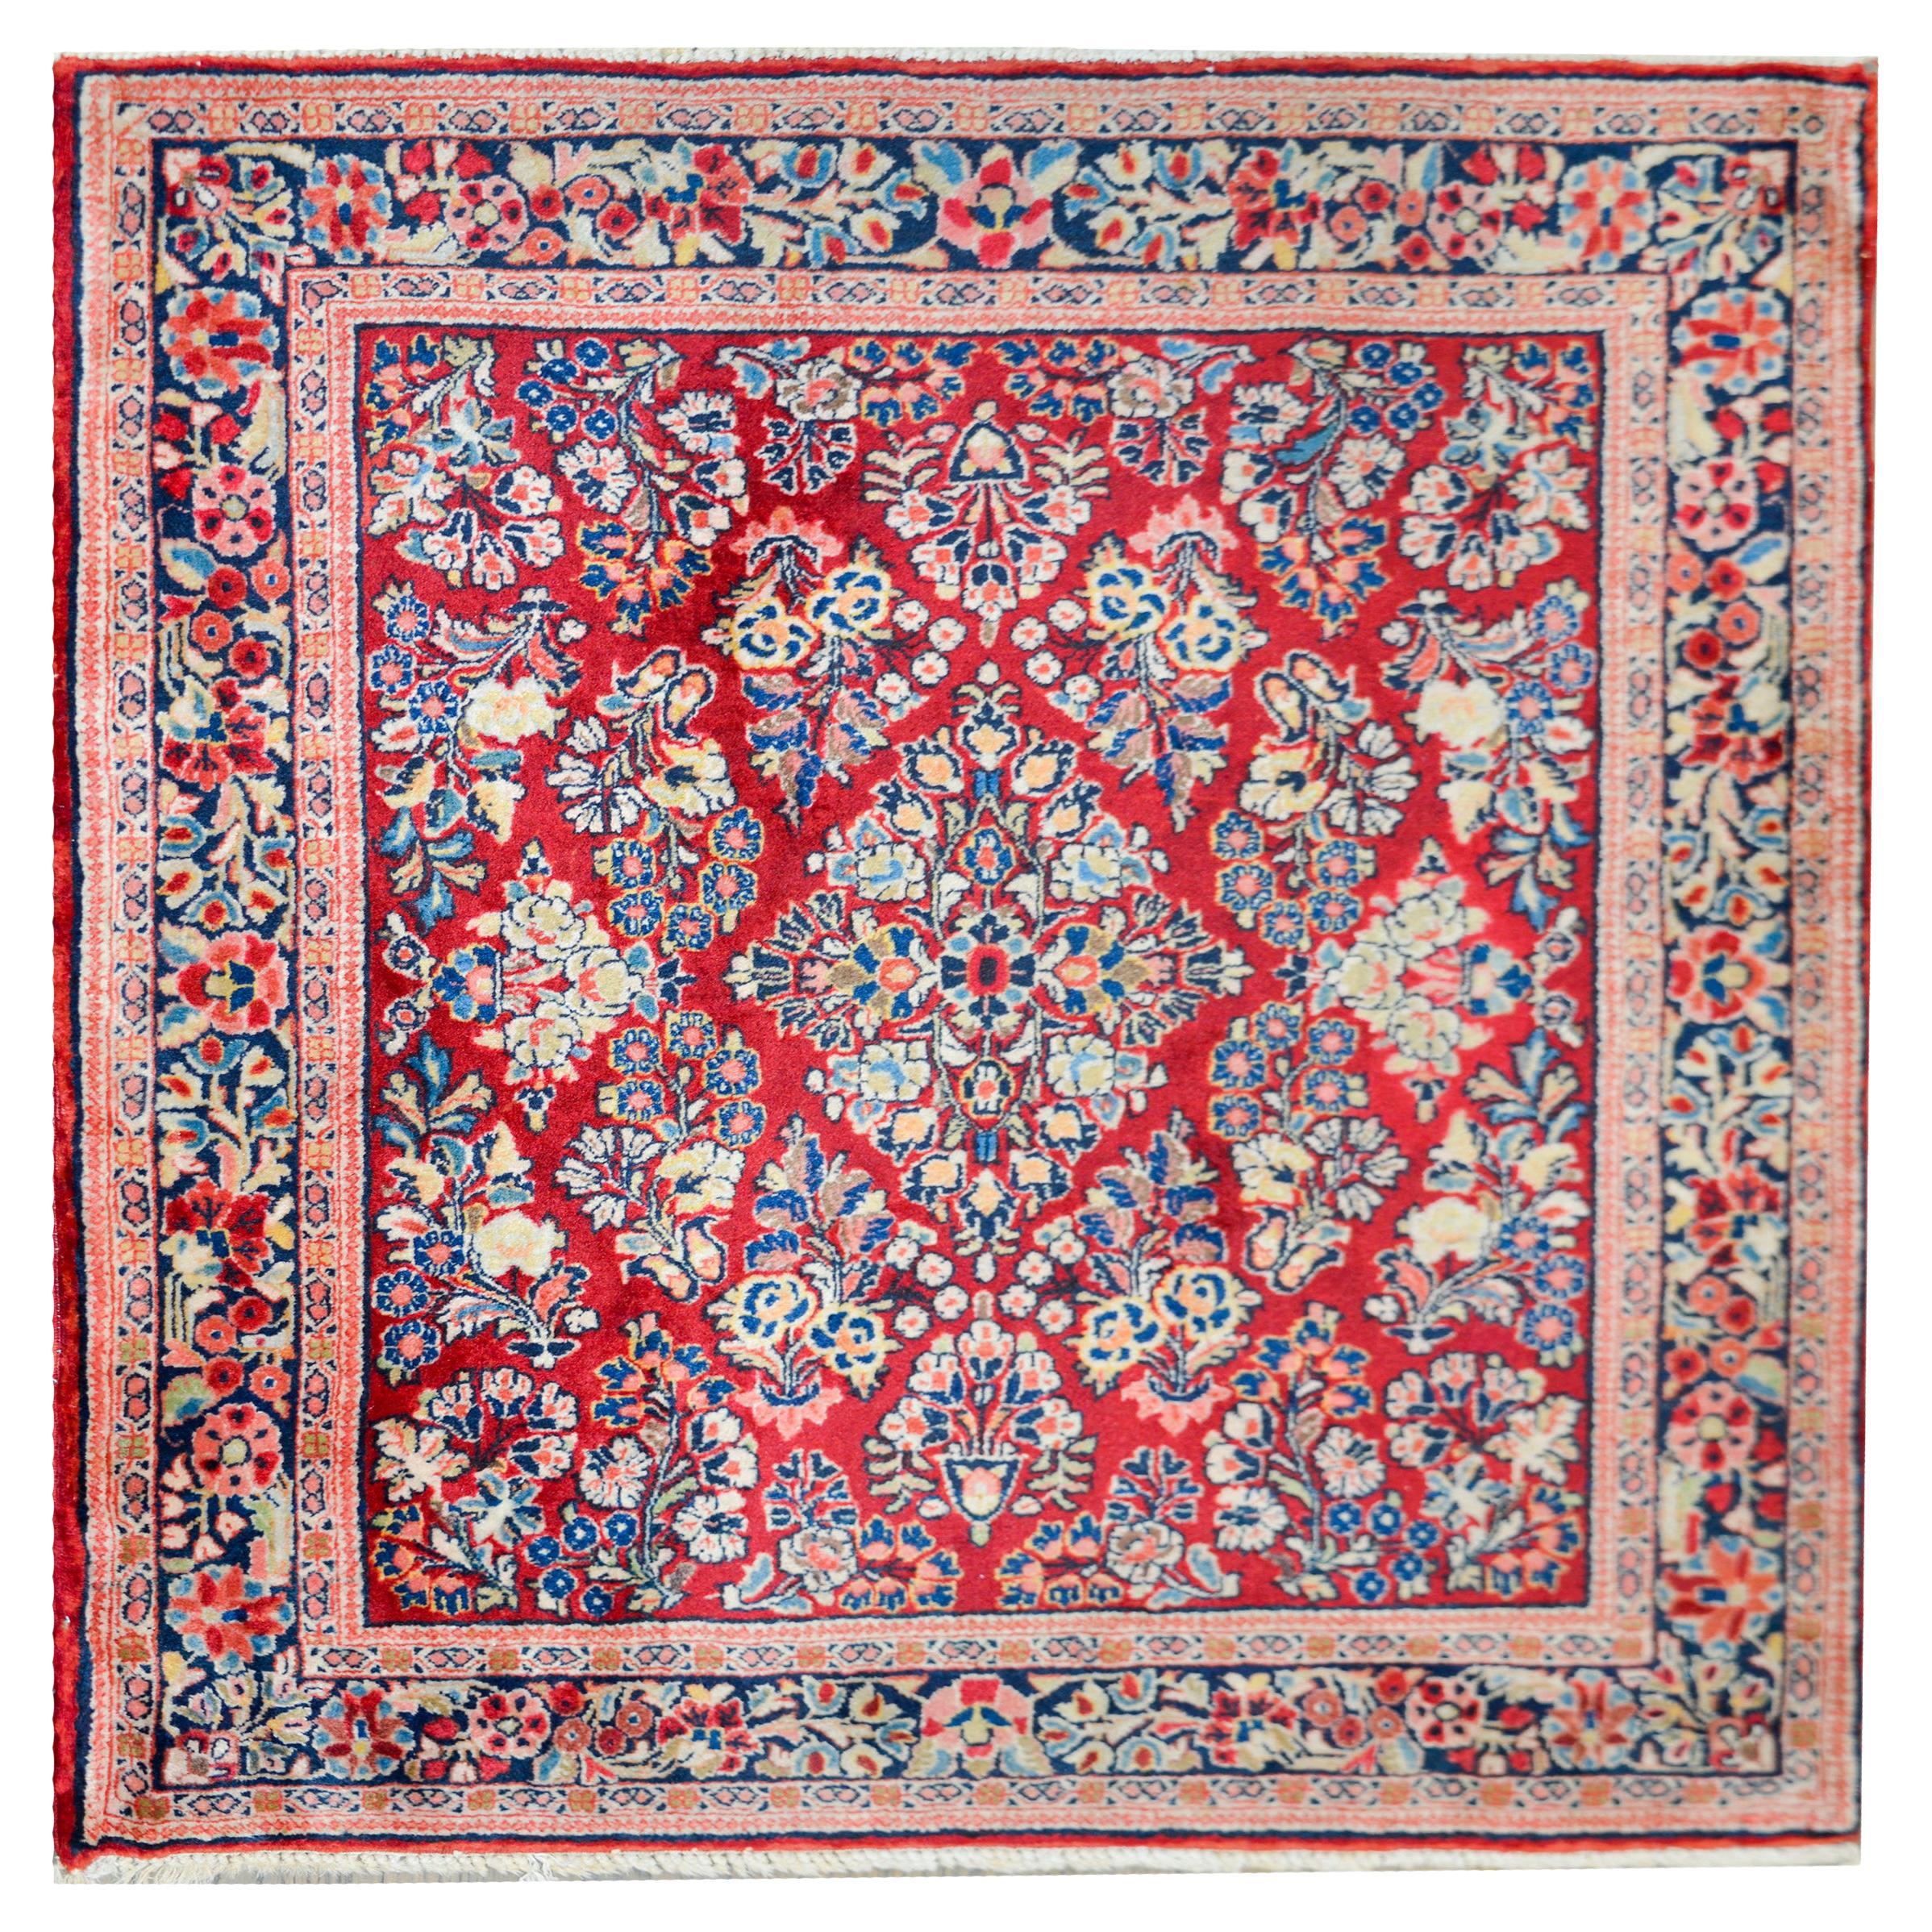 Early 20th Century Persian Sarouk Rug